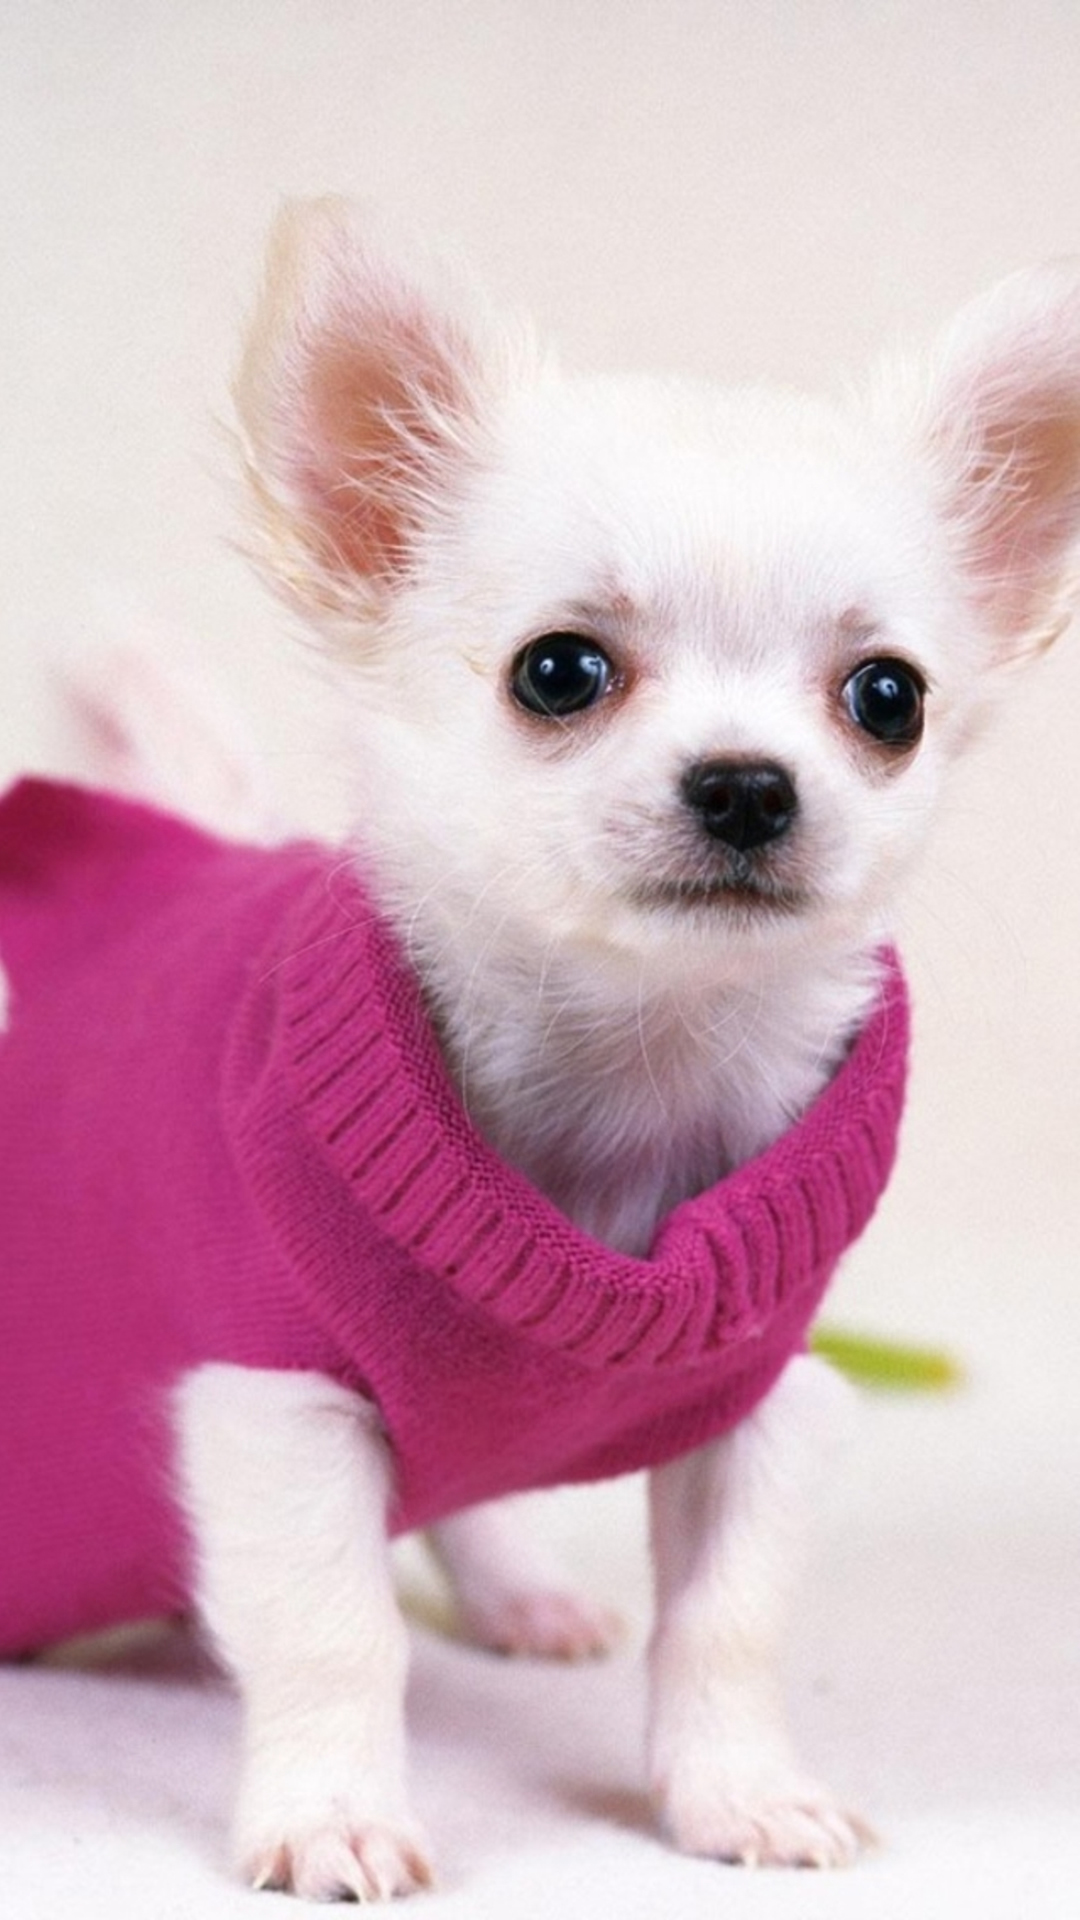 Cute Pretty Dog In Red Sweater iPhone 6 wallpaper